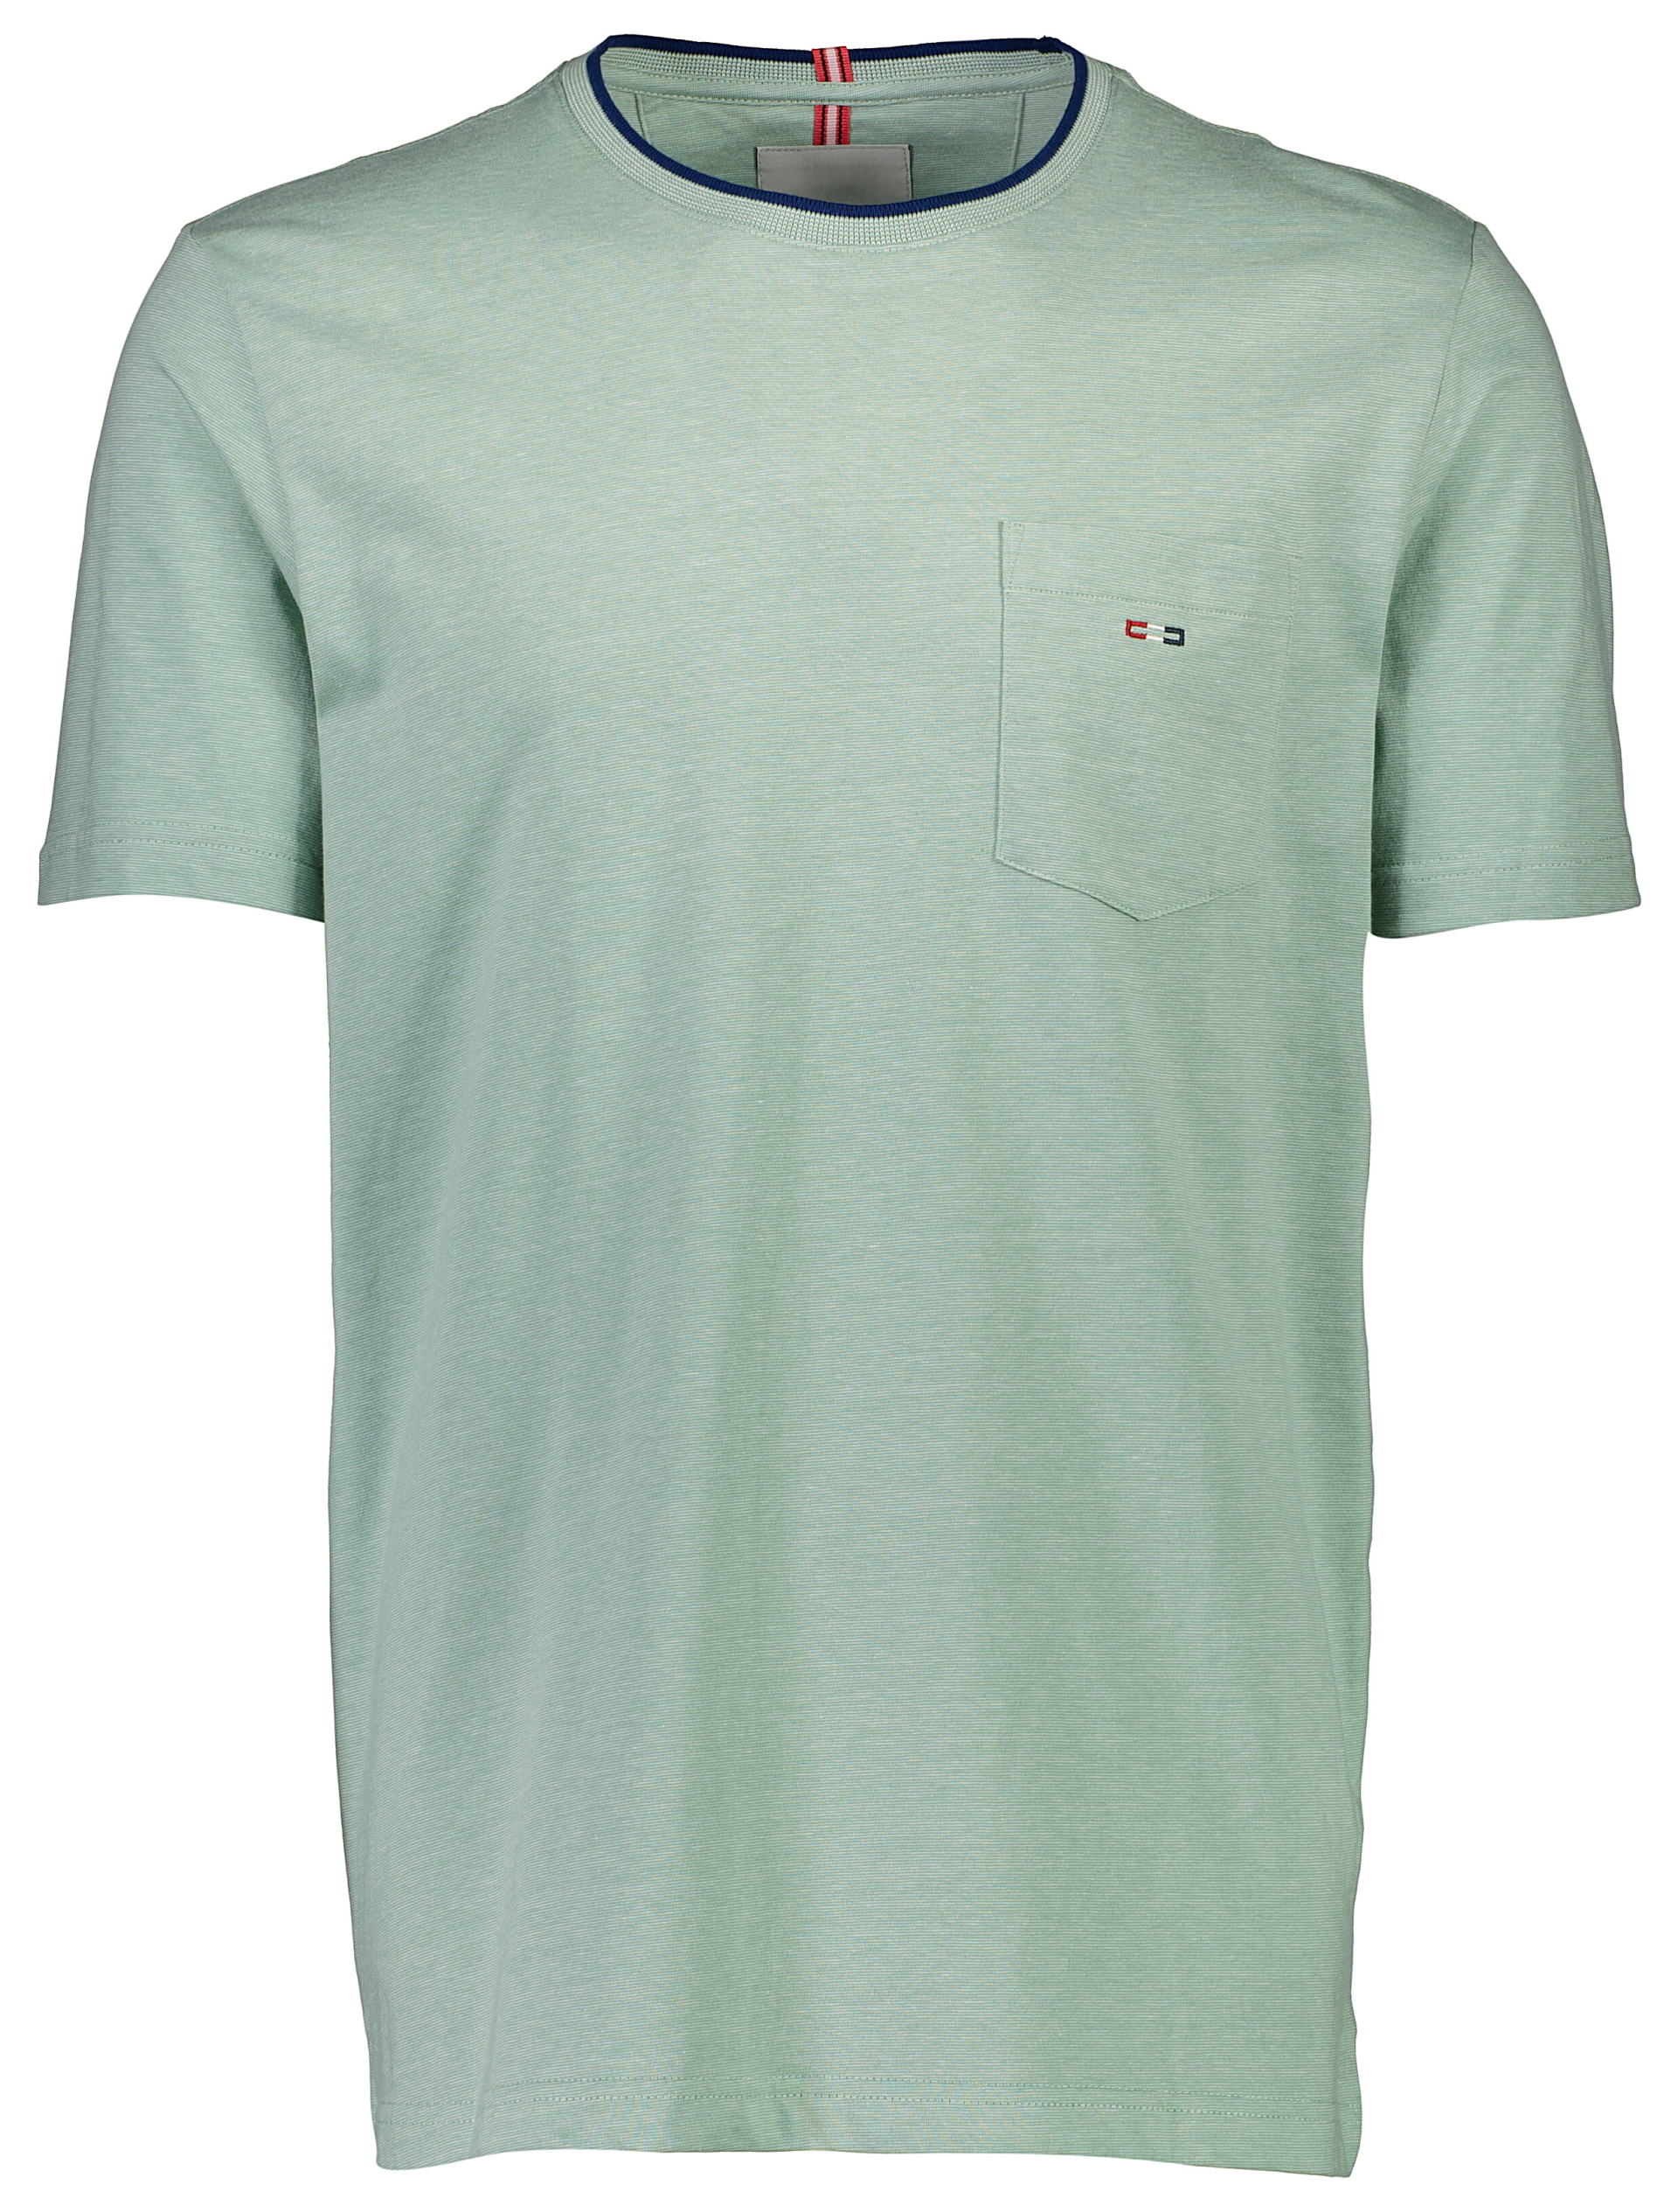 Bison T-shirt grøn / lt green